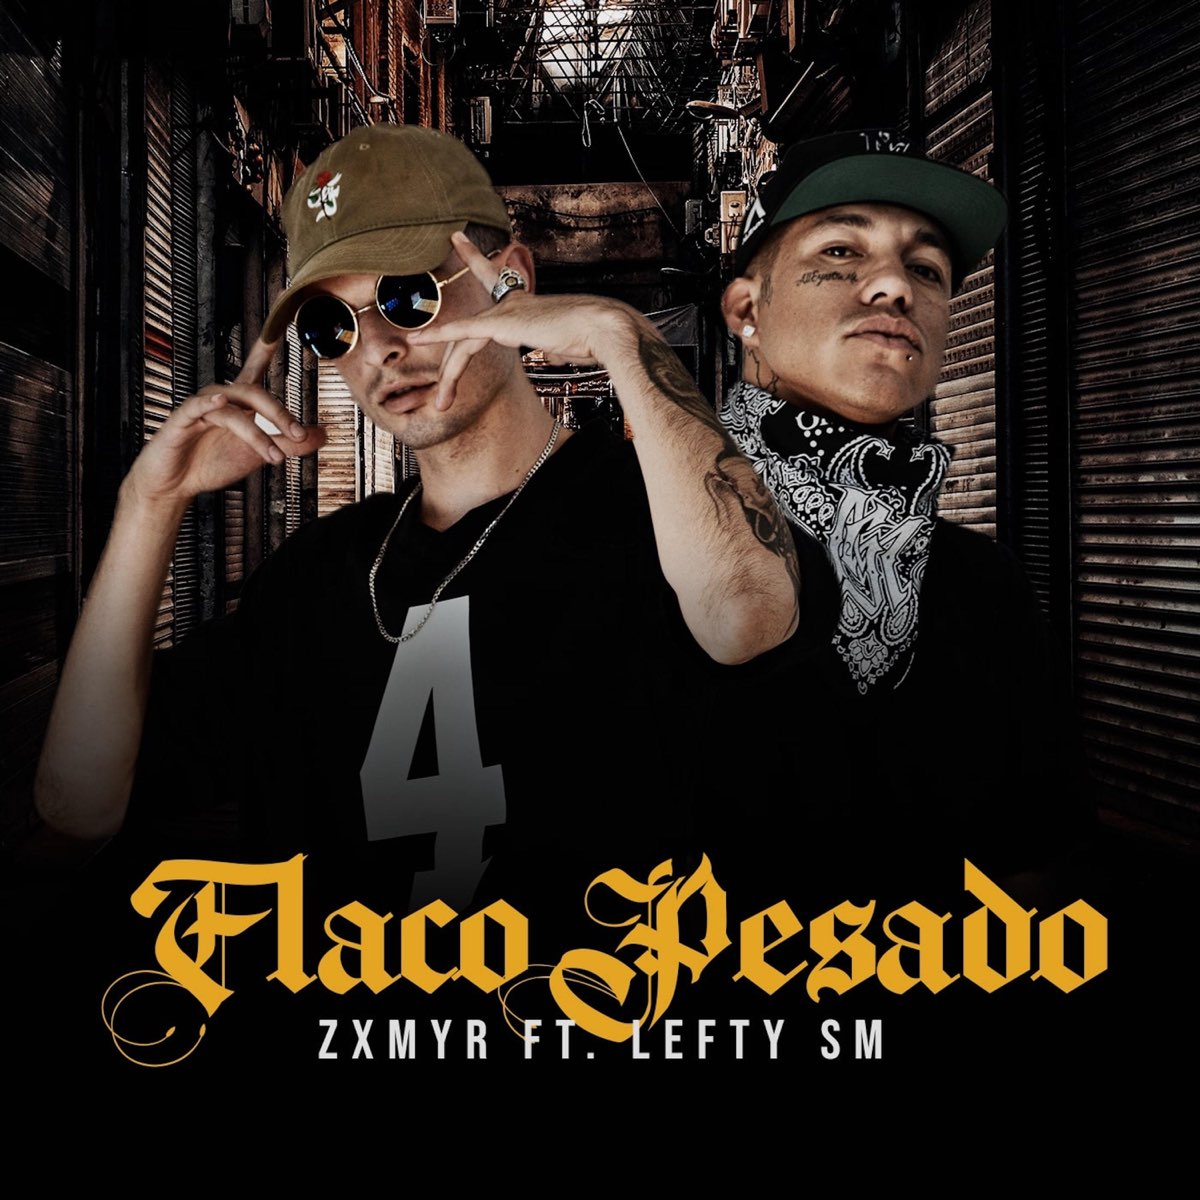 Flaco Pesado - Single by Zxmyr & Lefty Sm on Apple Music